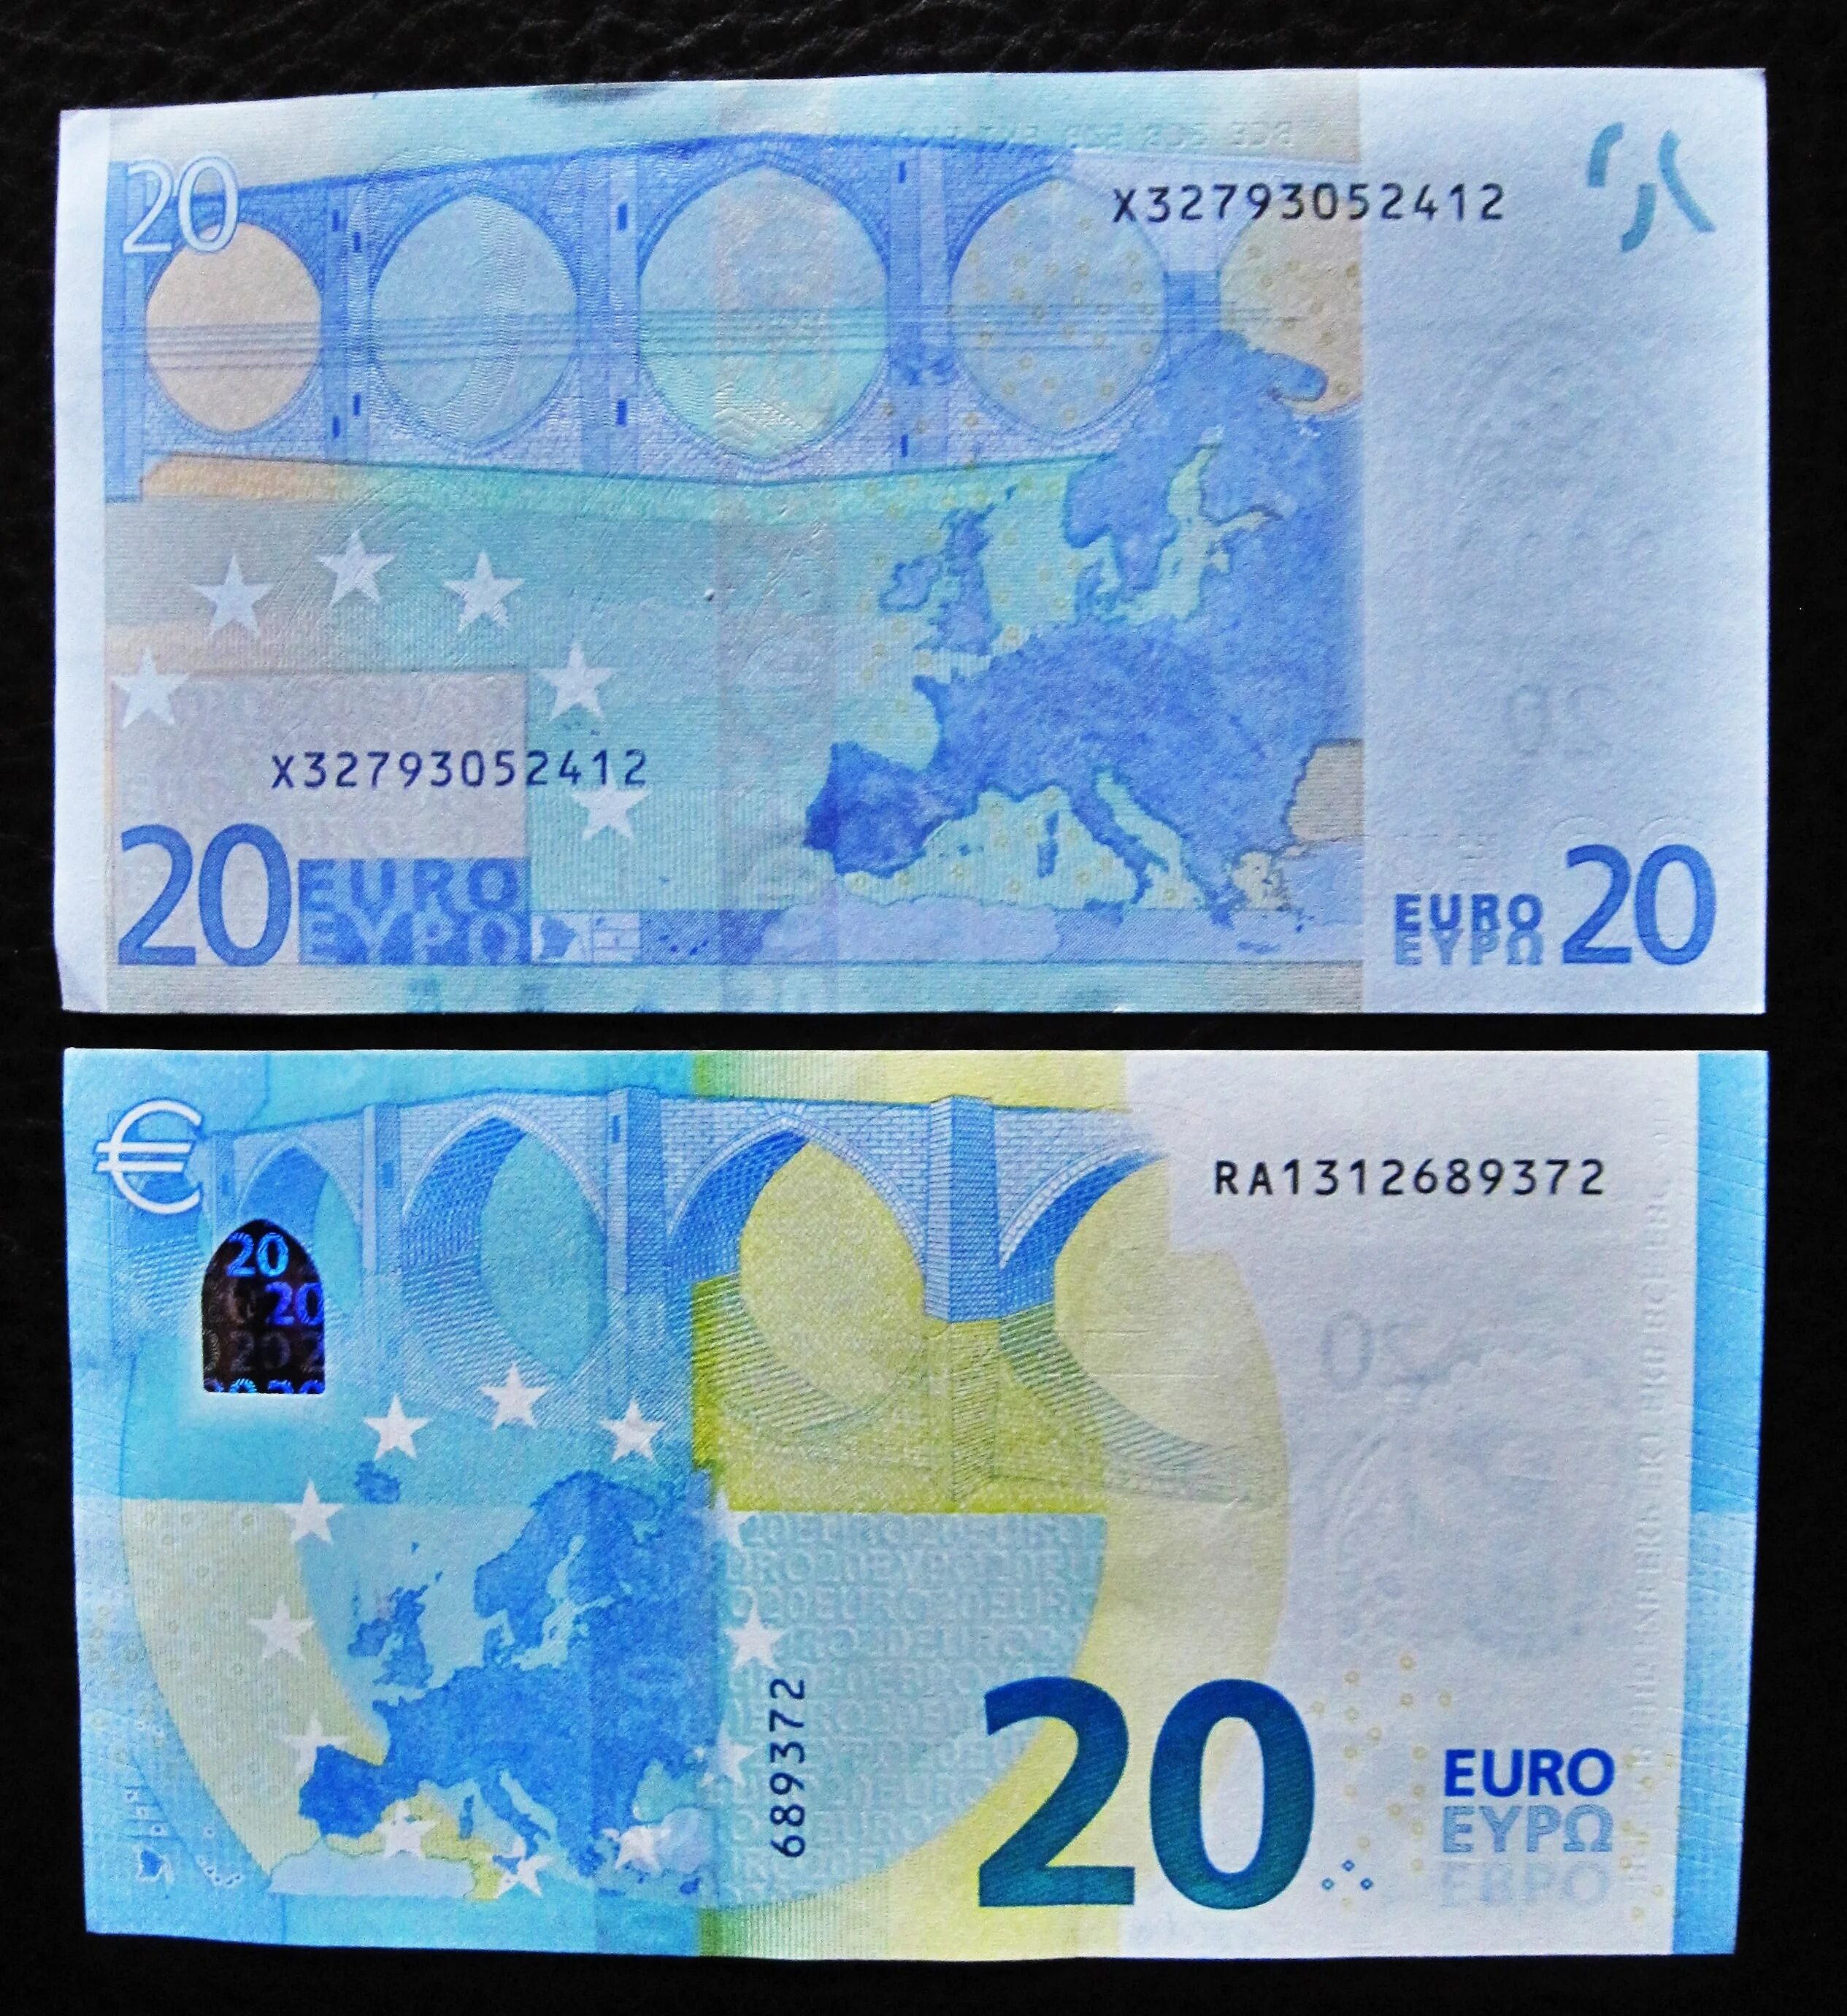 Синяя купюра. 20 Евро. Банкноты евро 20. Старые банкноты евро 20. Синяя купюра евро.